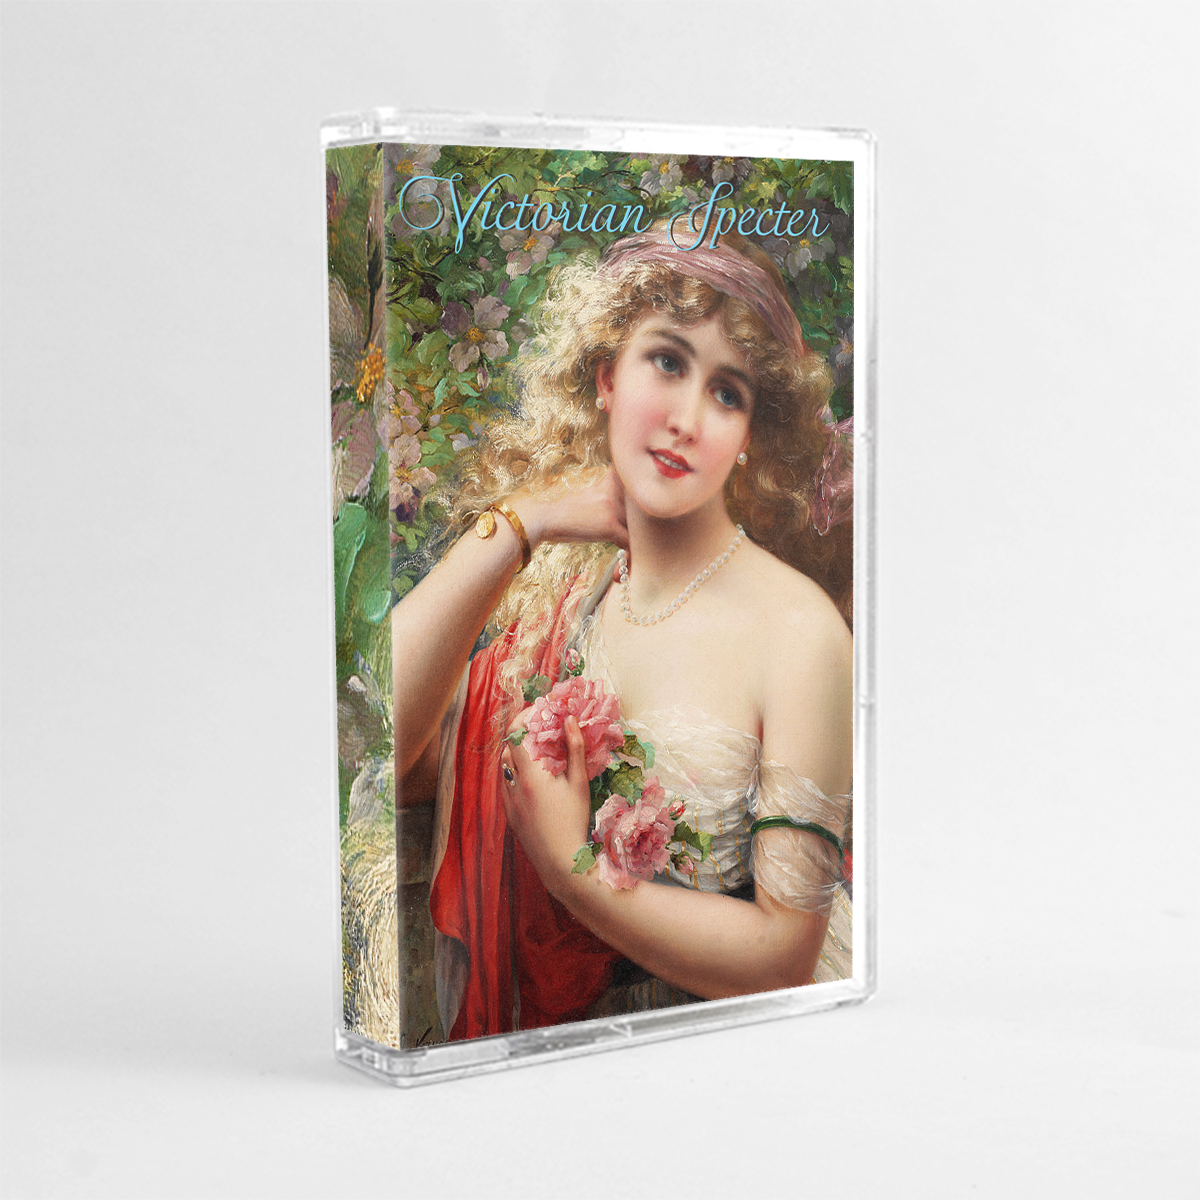 Victorian Specter - s/t cassette